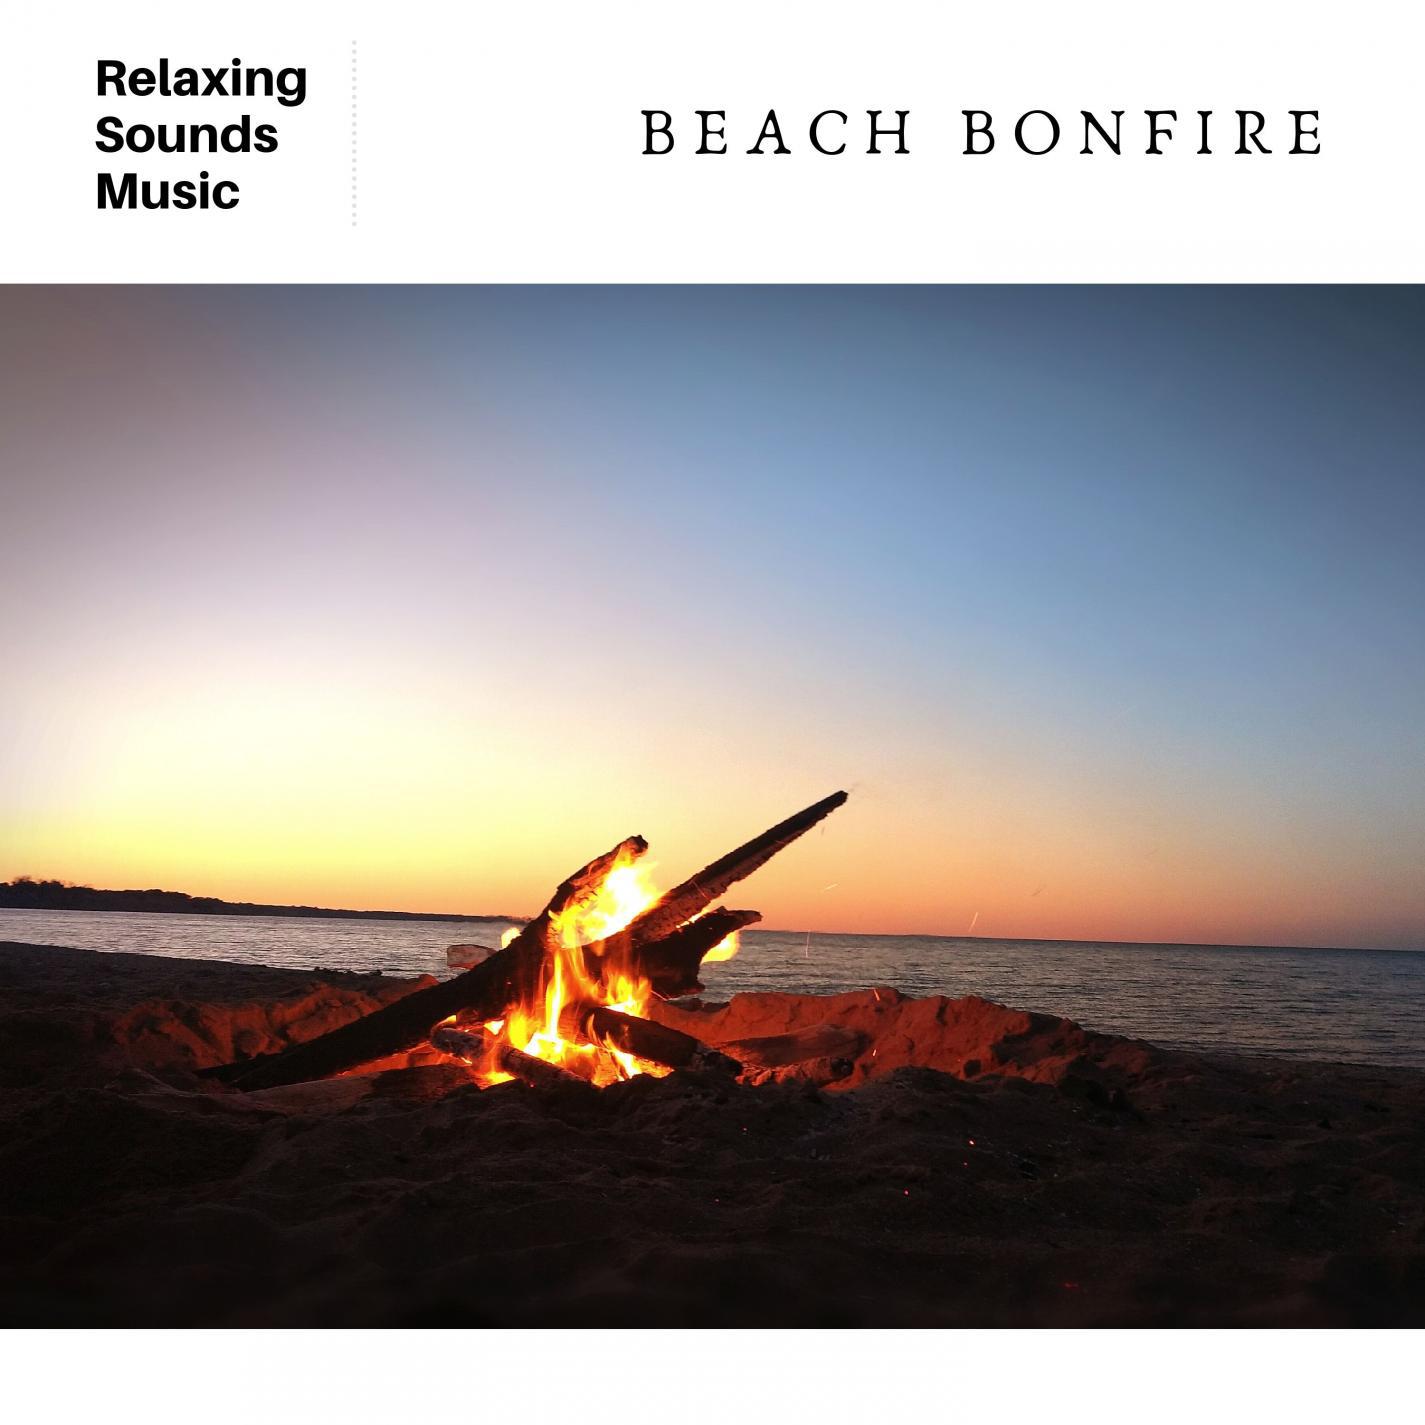 Ocean Bonfire